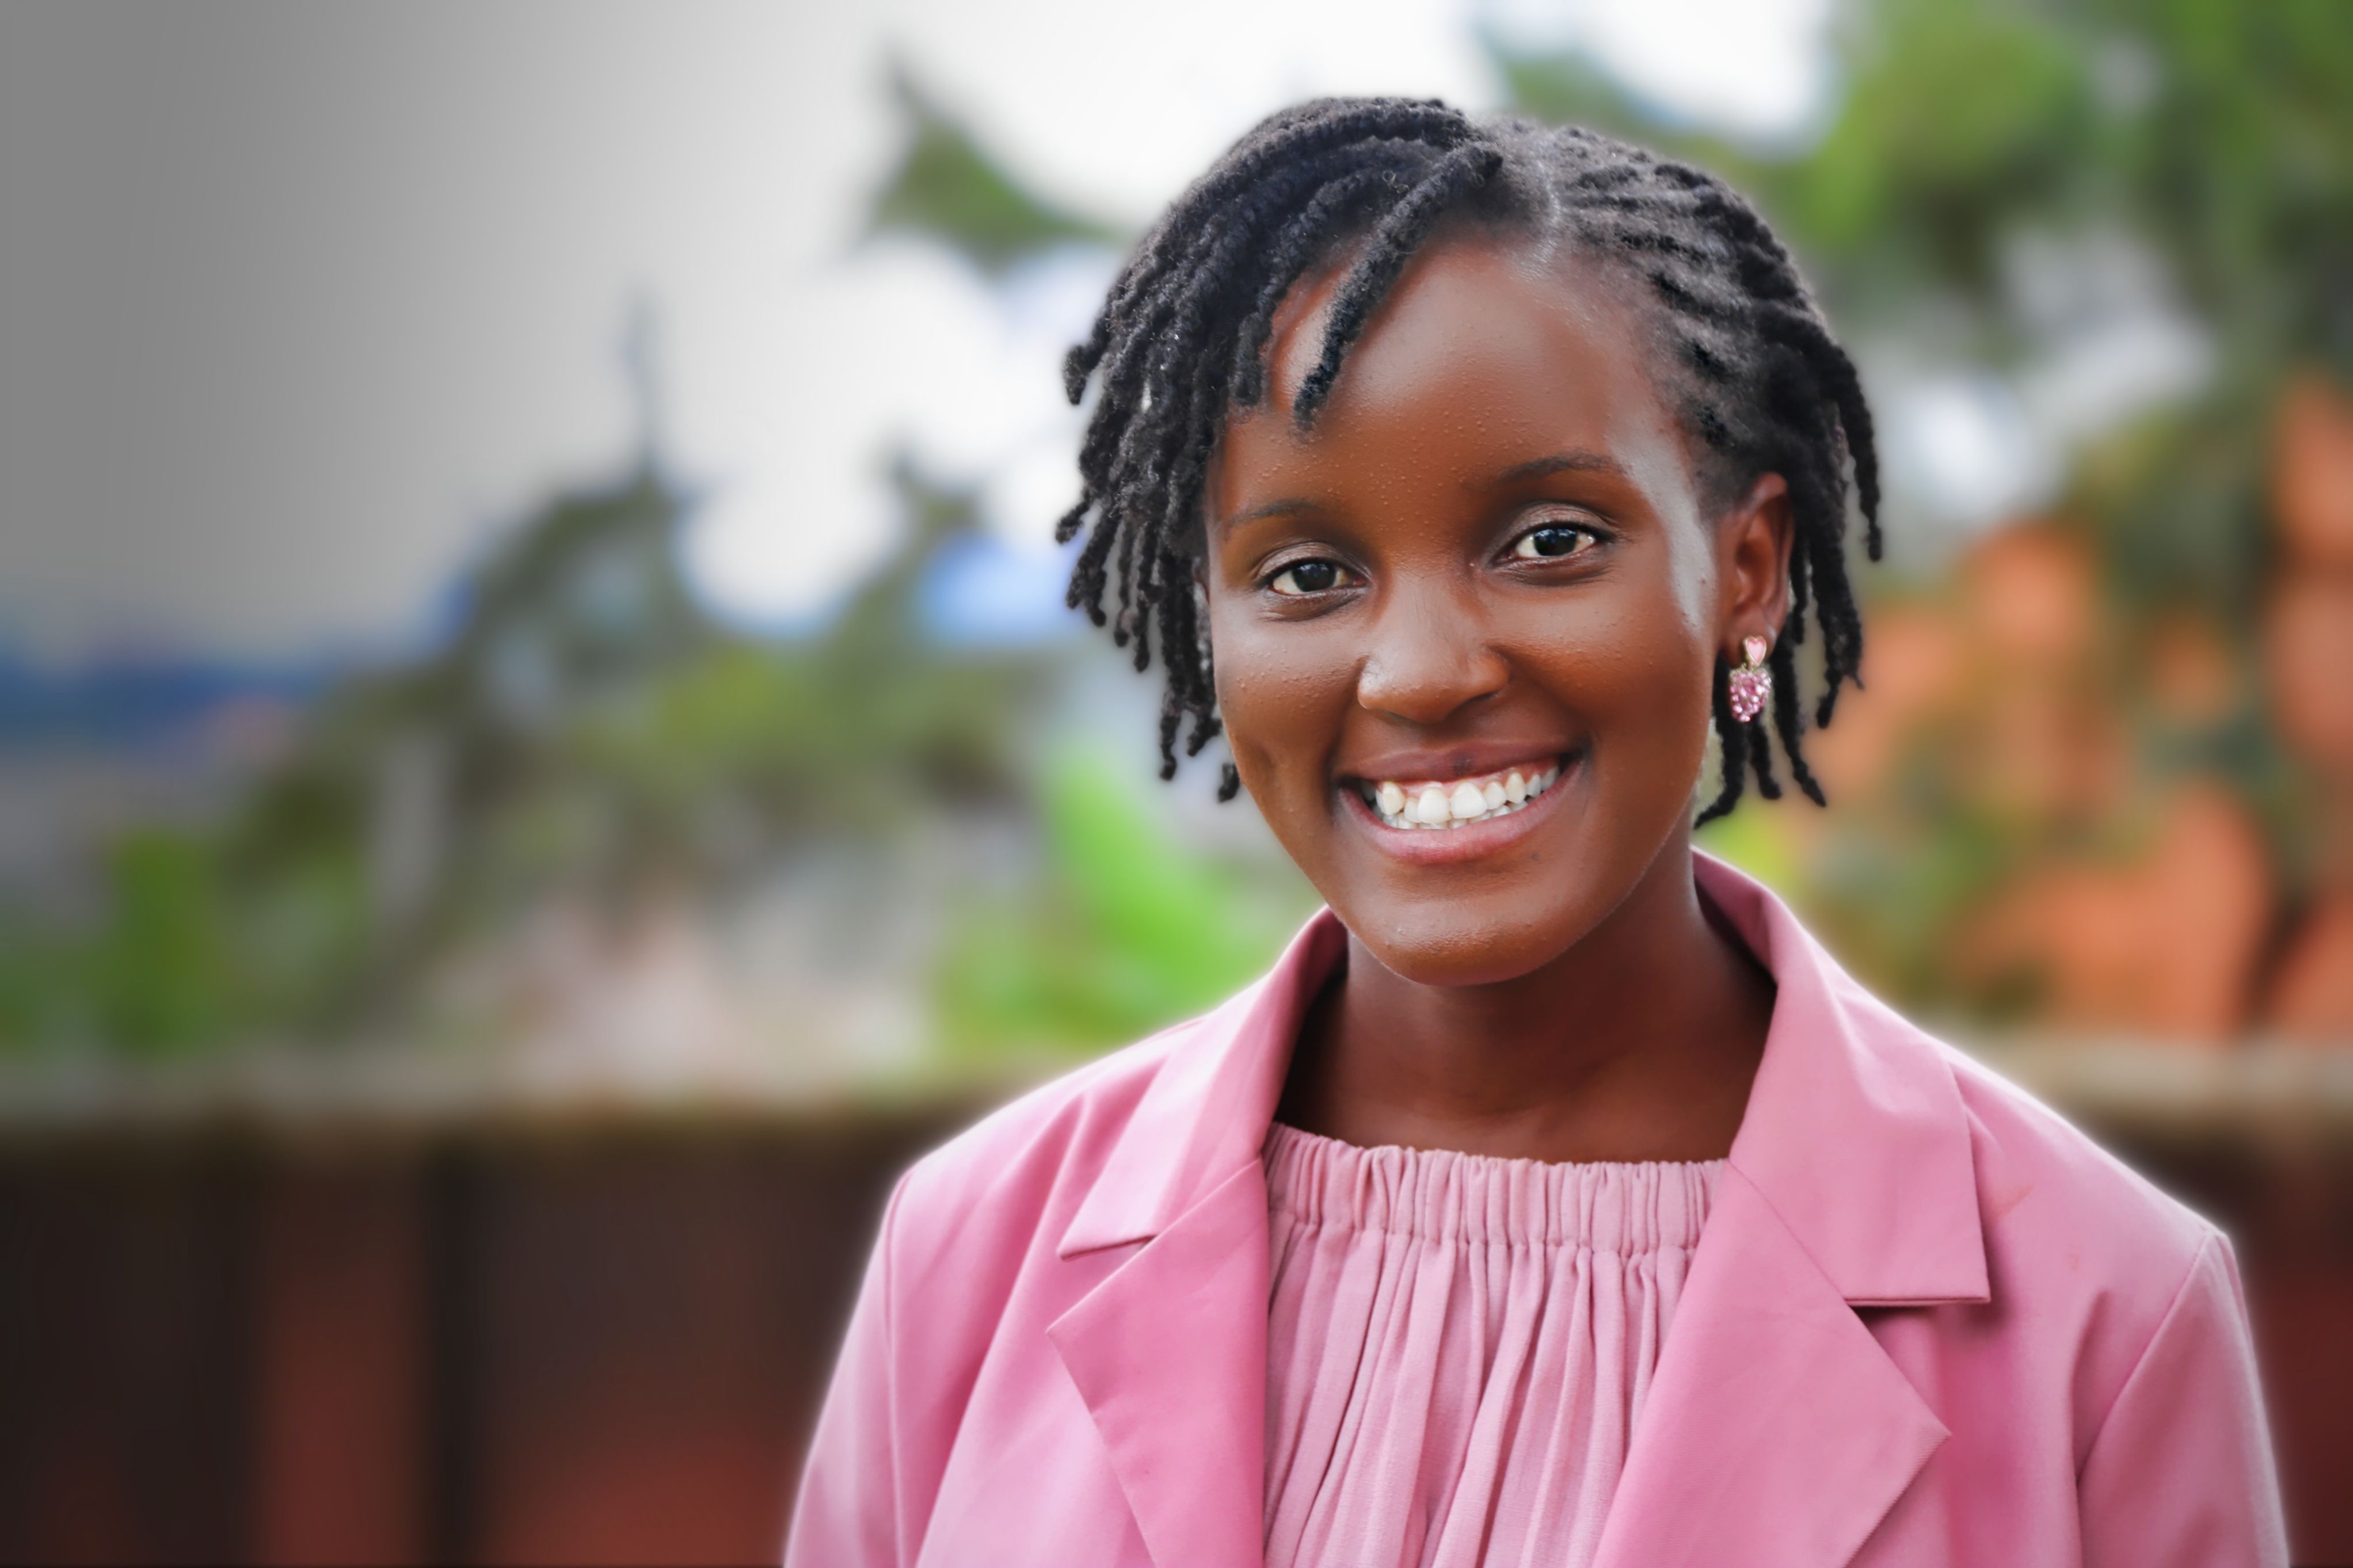 Ugandan climate change activist Vanessa Nakate